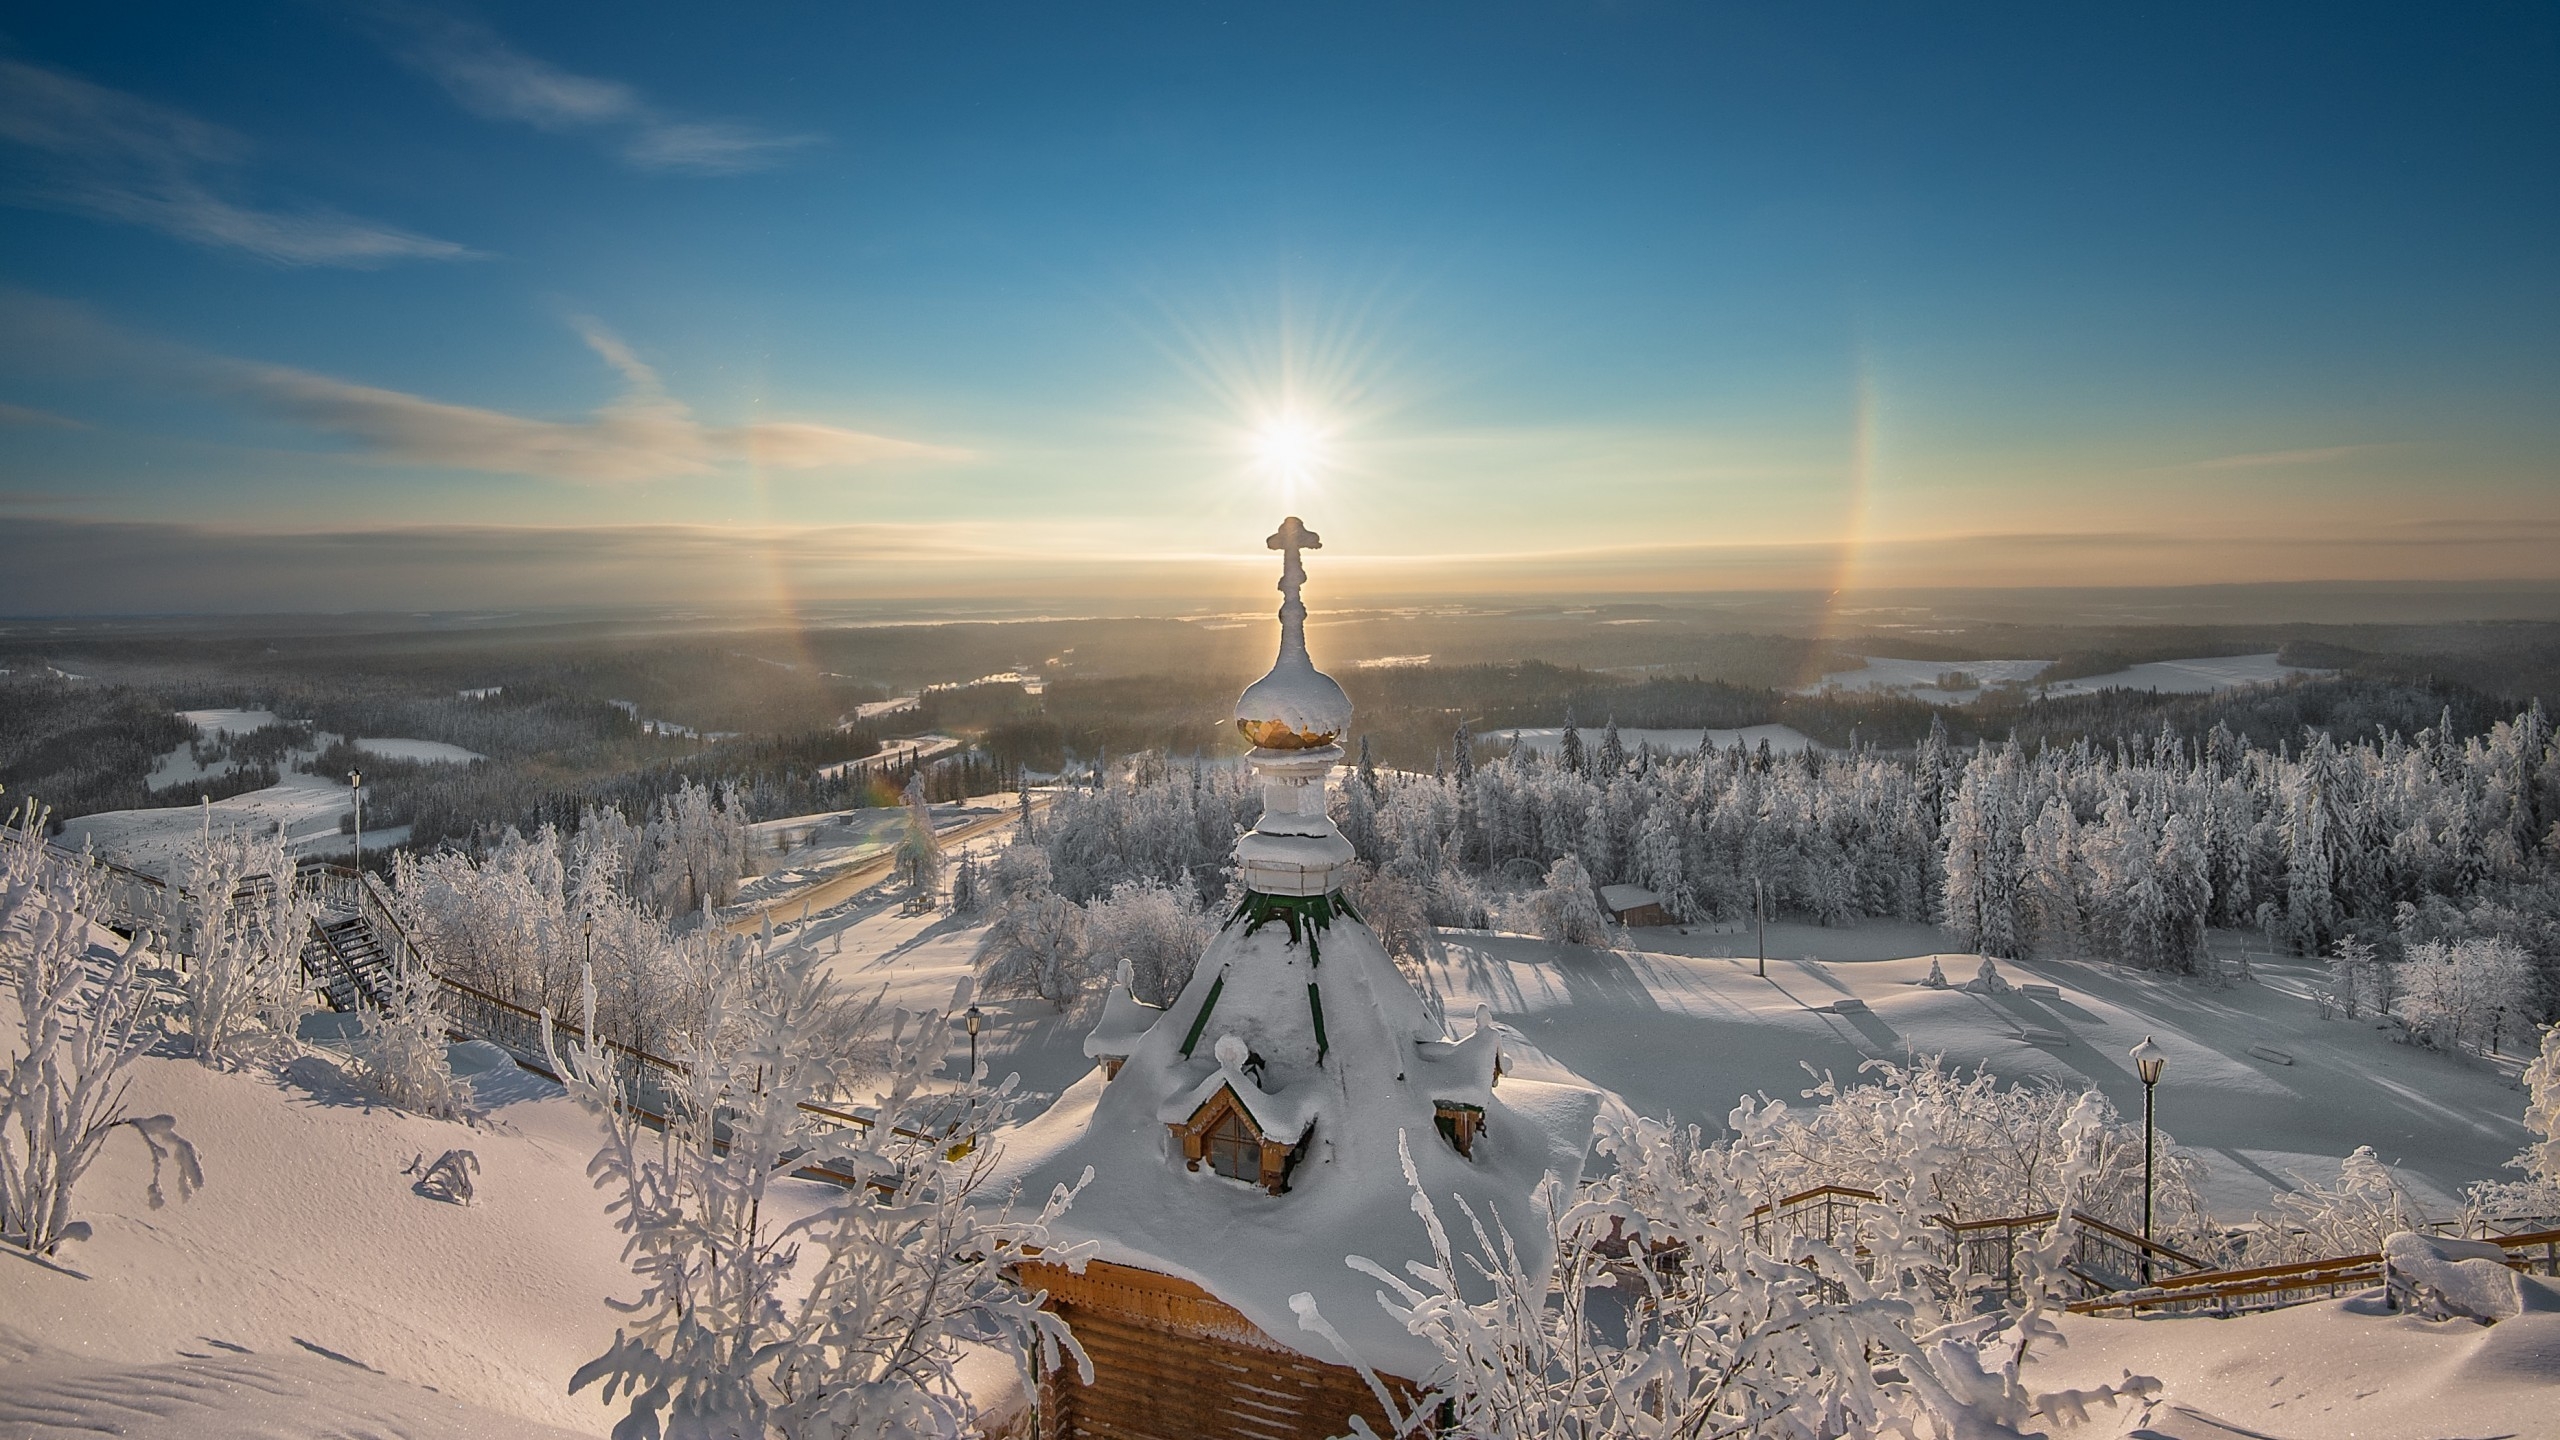 Amazing Winter Landscape for 2560x1440 HDTV resolution